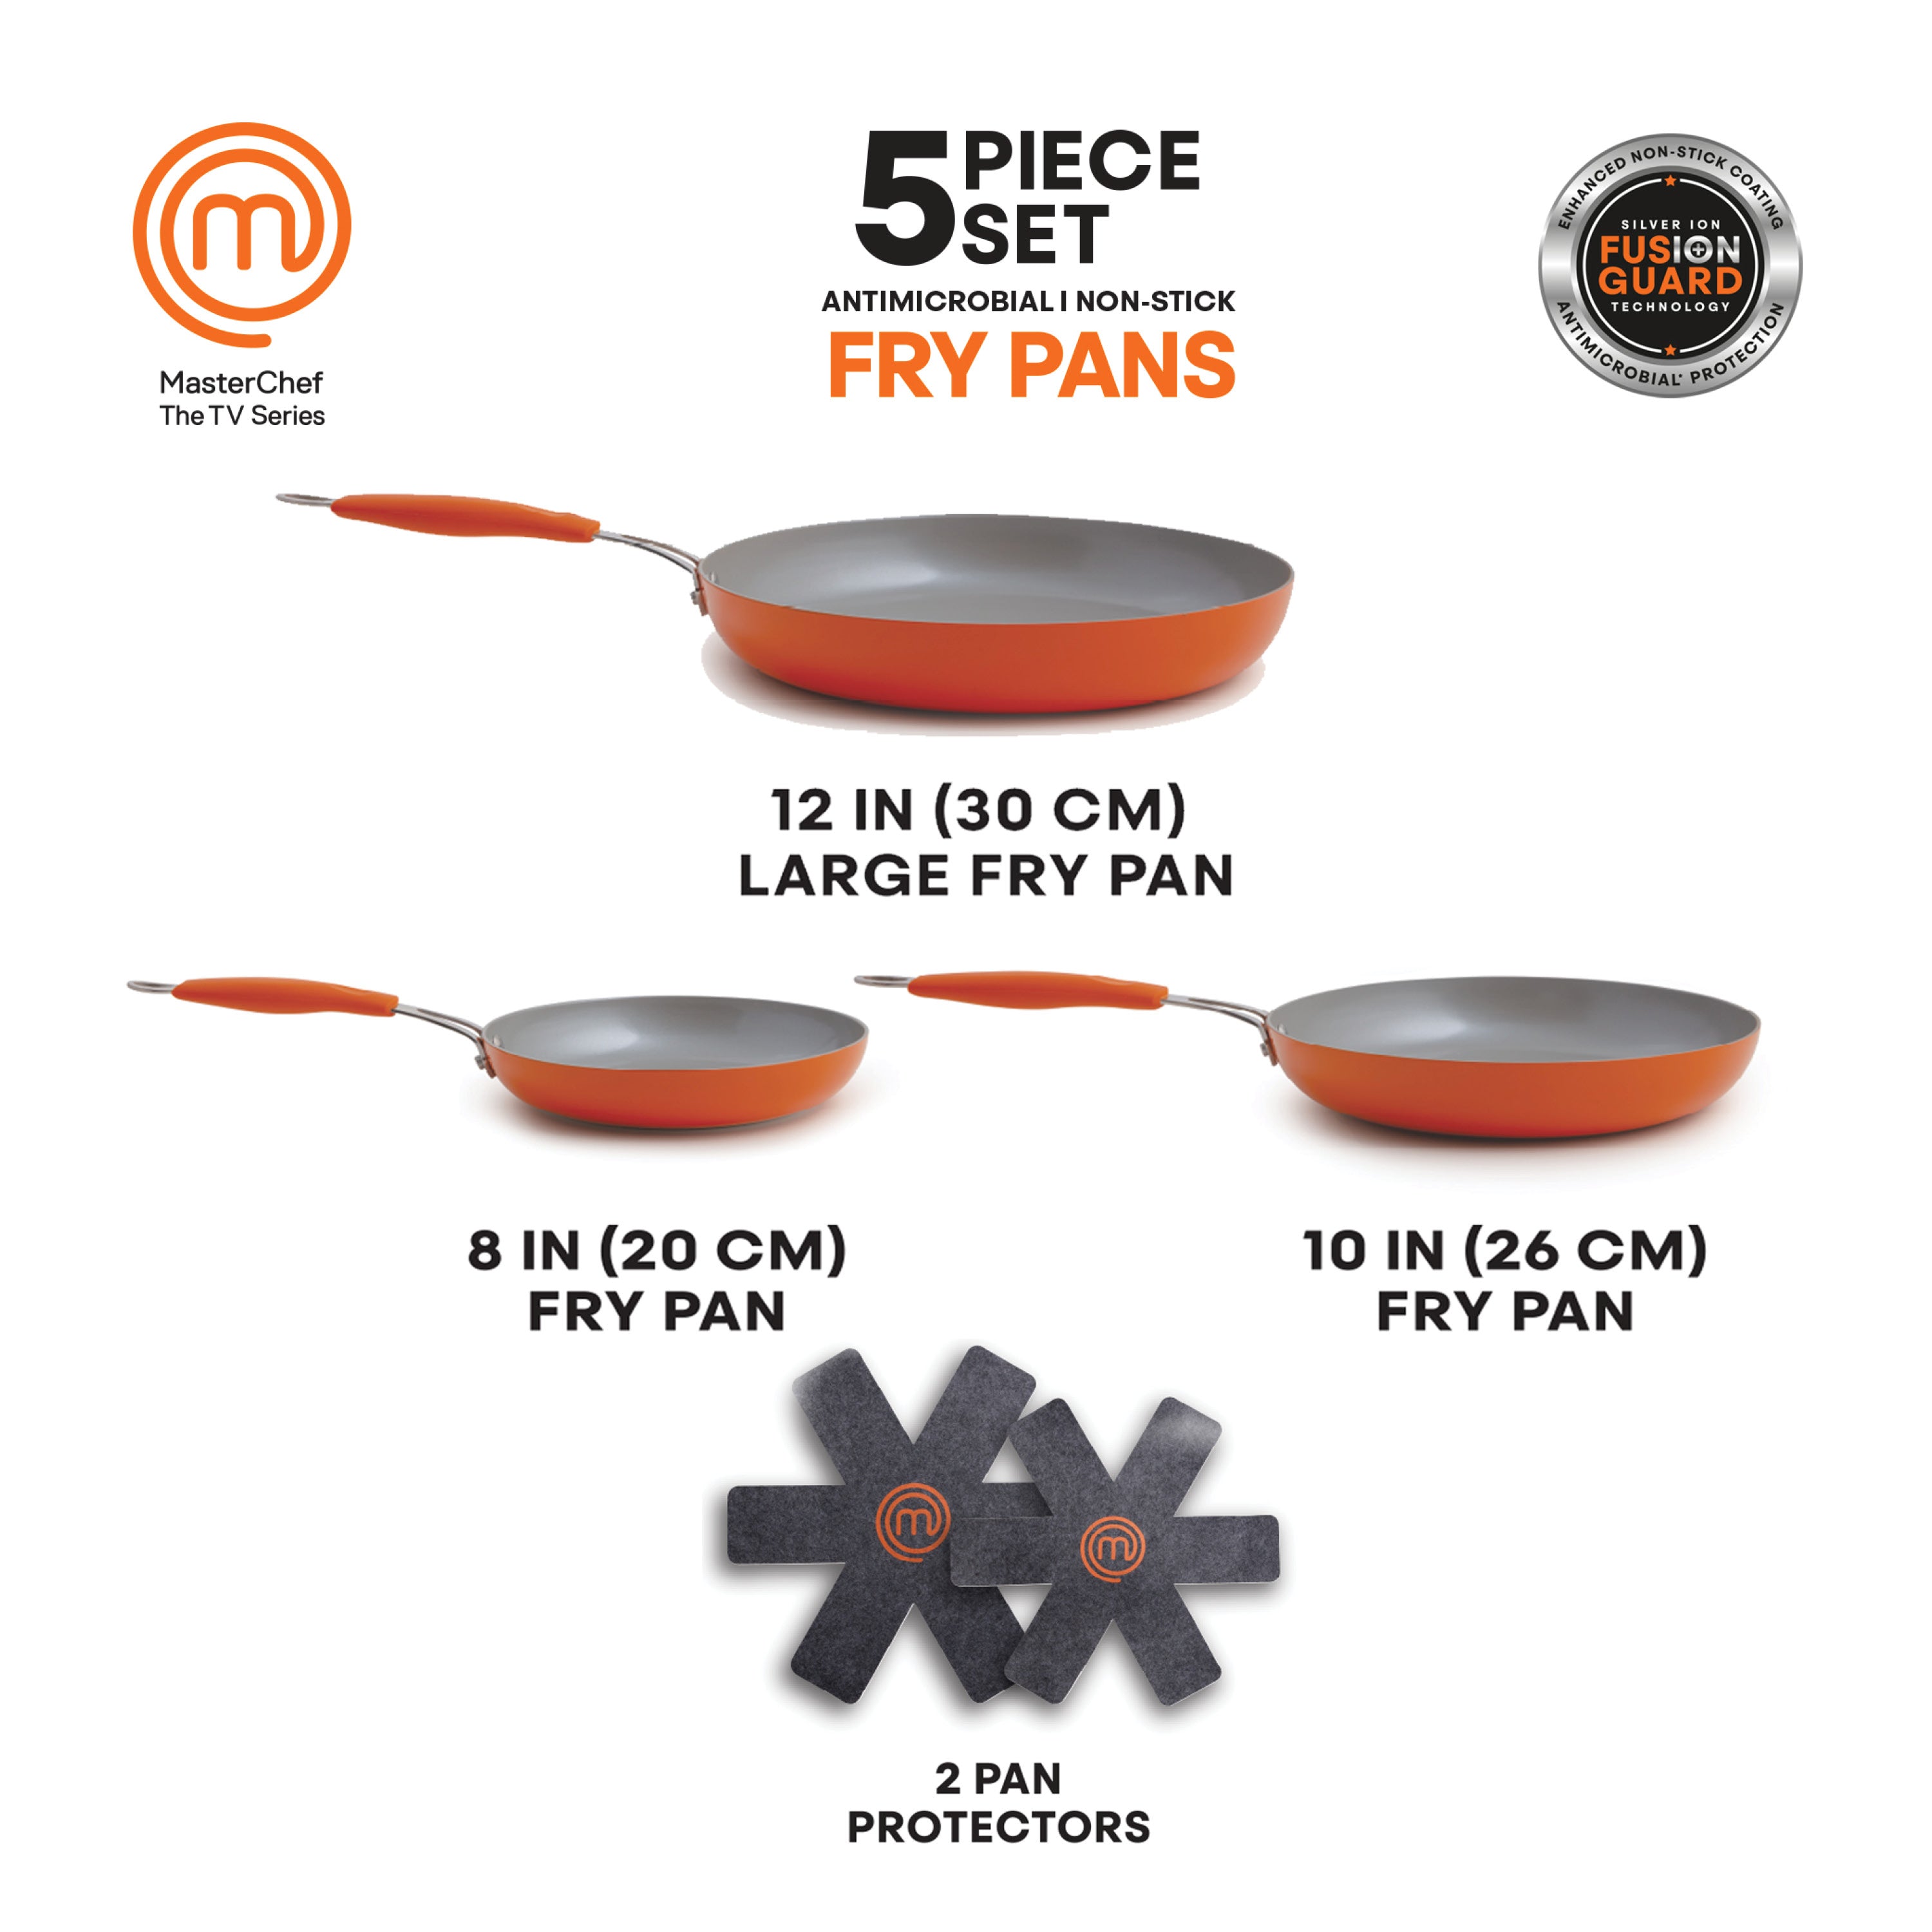 MasterChef MC3002 5 Pieces Champions Fry Pan Set Orange